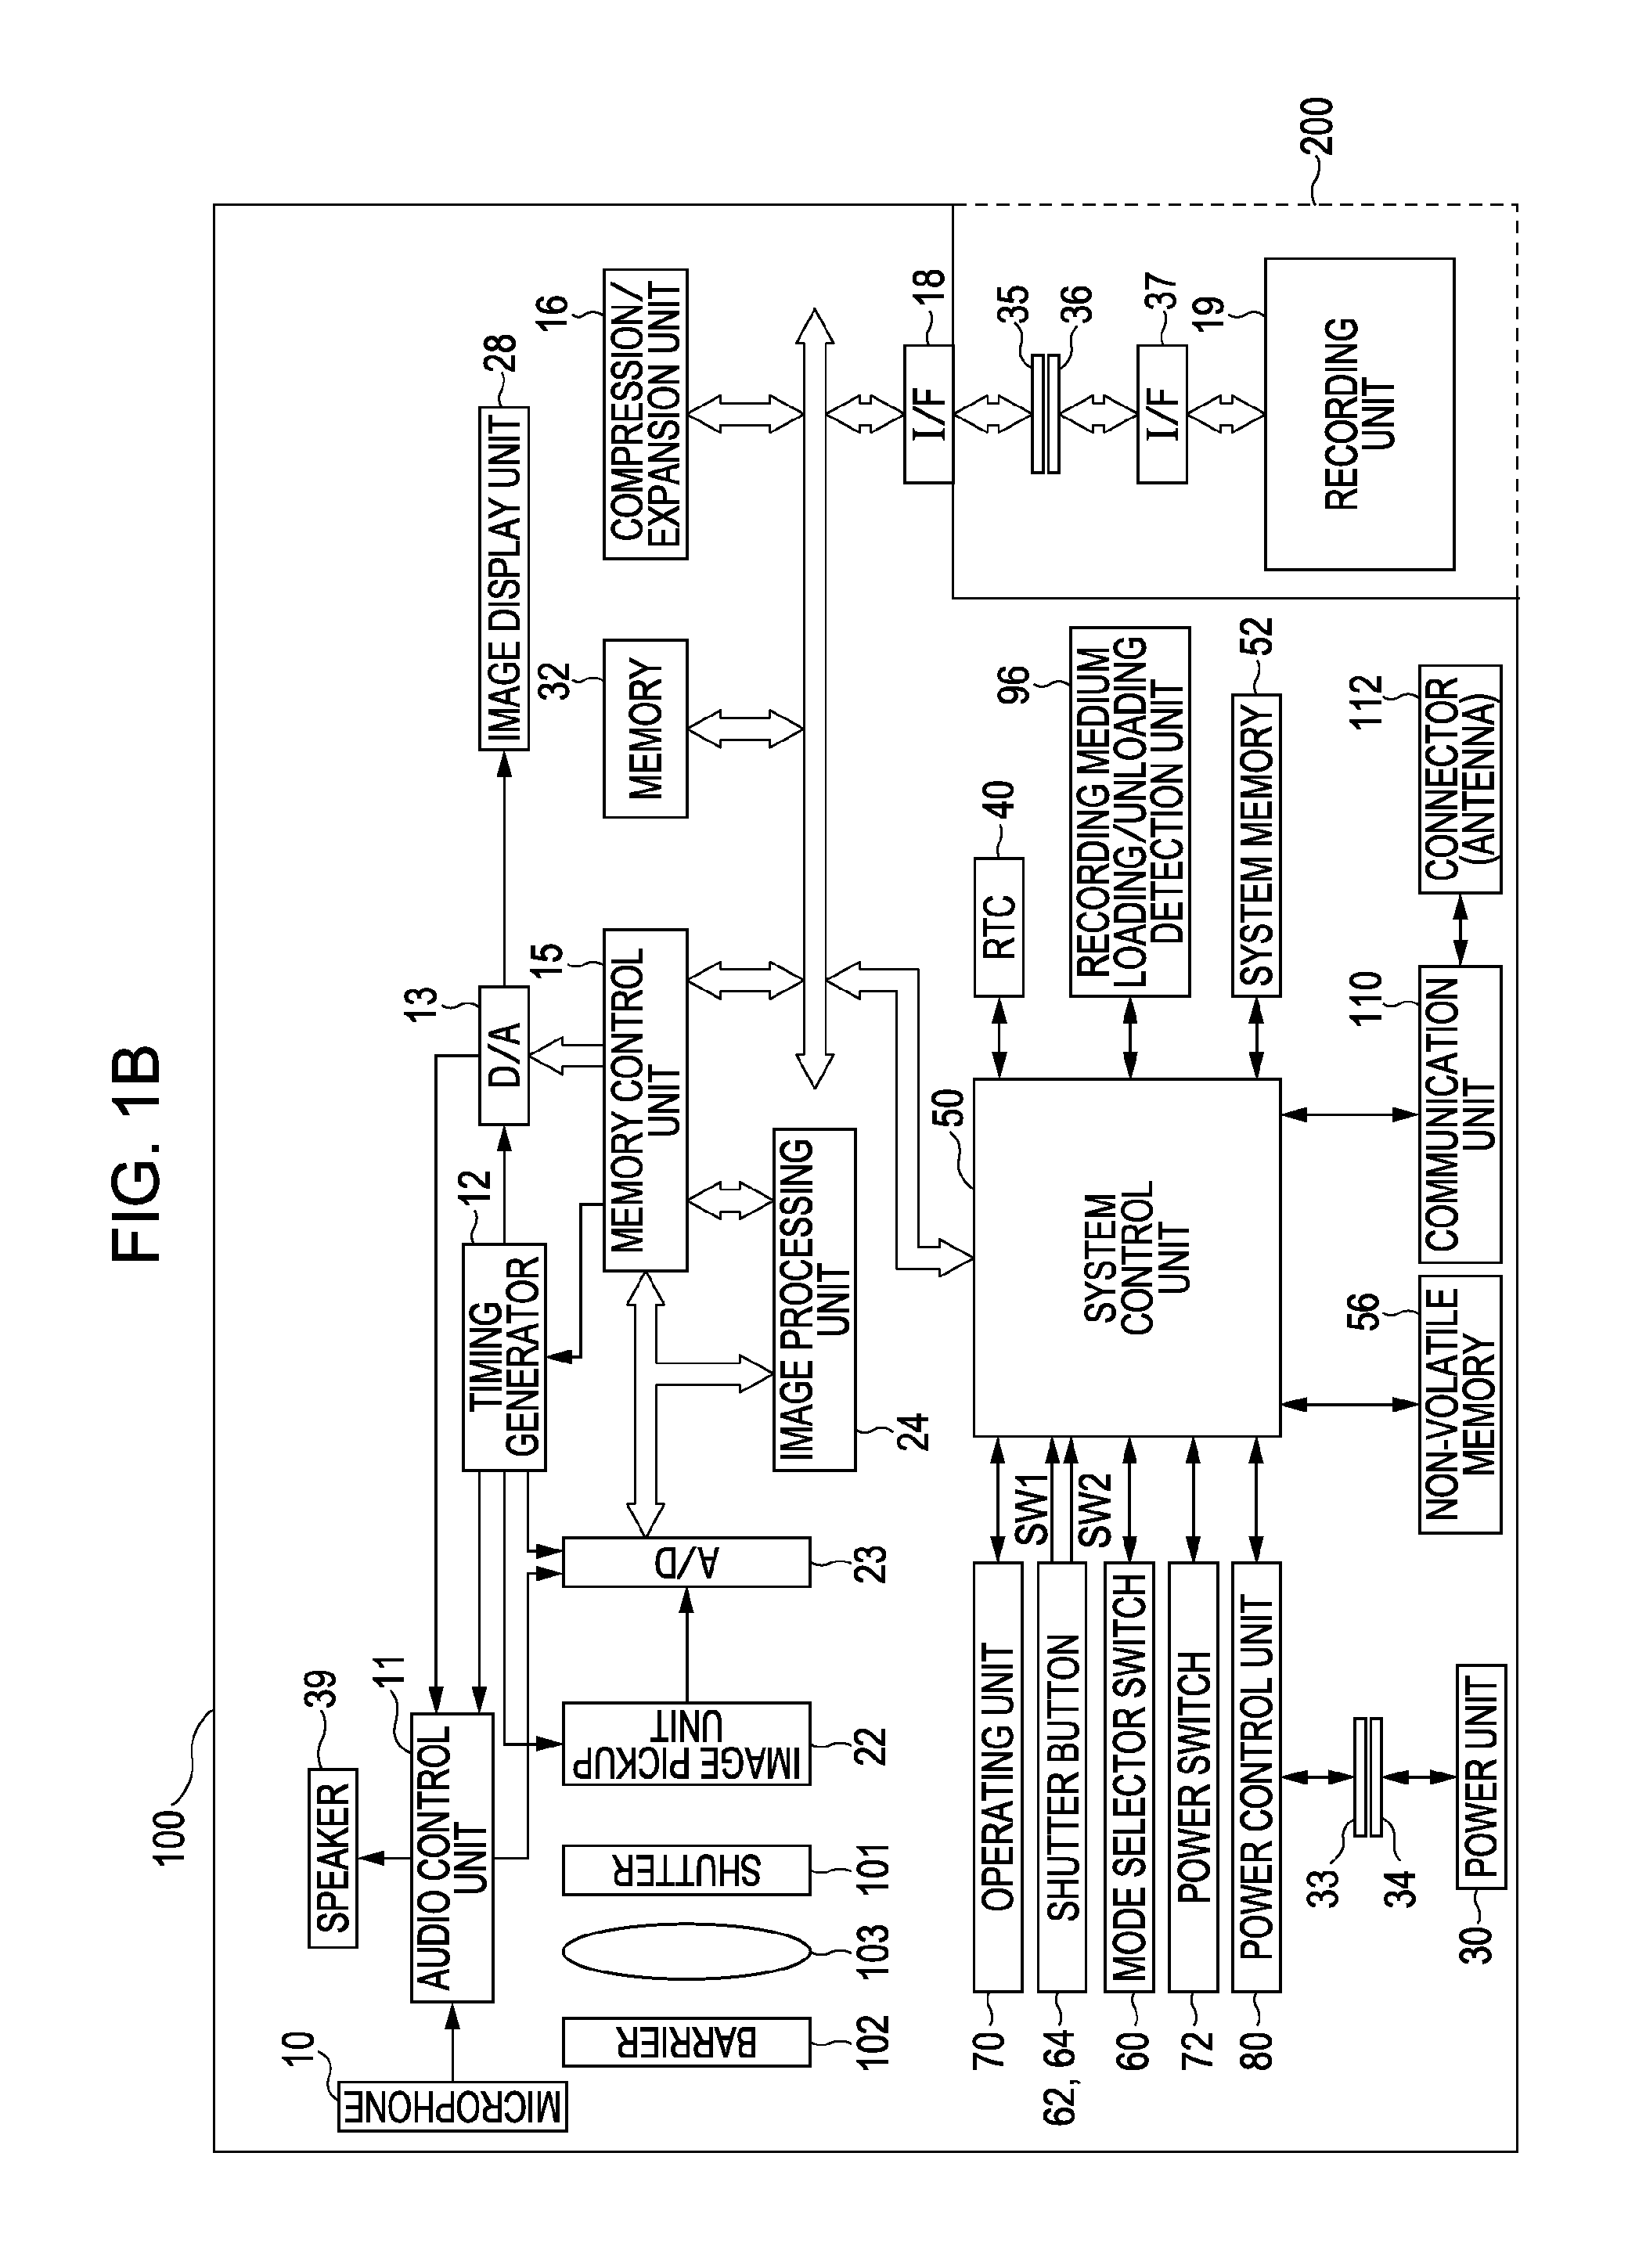 Image display control apparatus and method